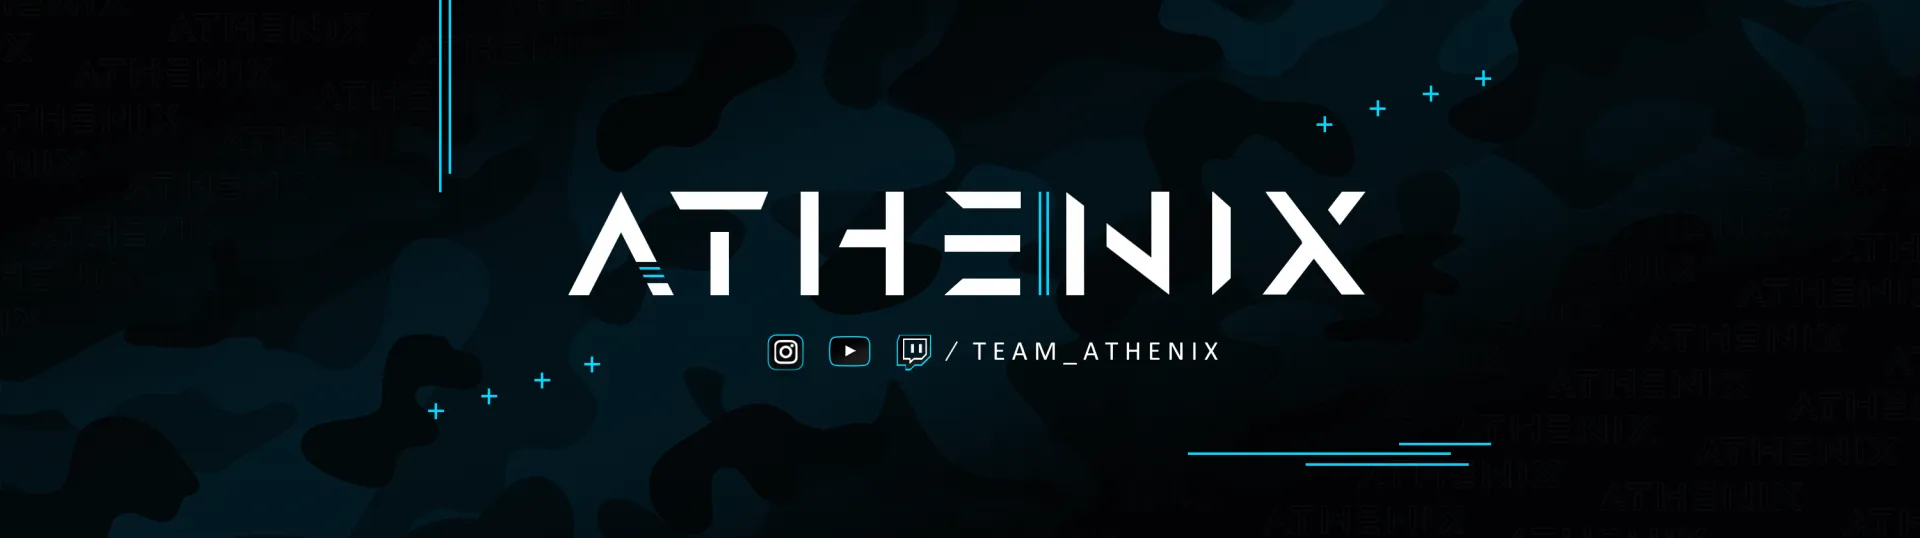 Team Athenix banner